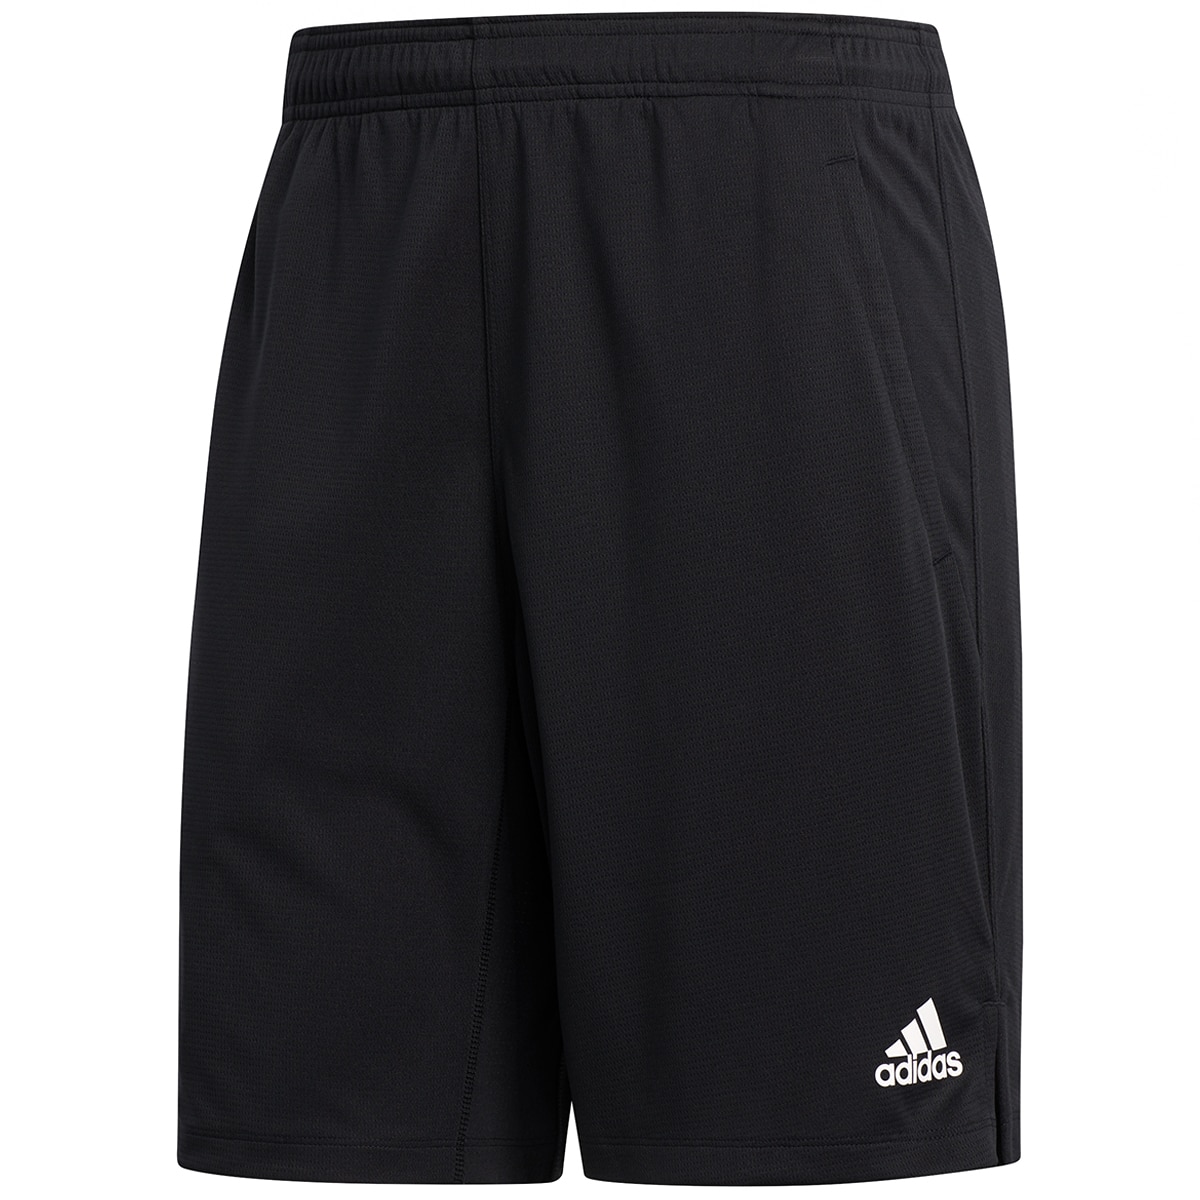 Adidas Shorts Active - Black Logo